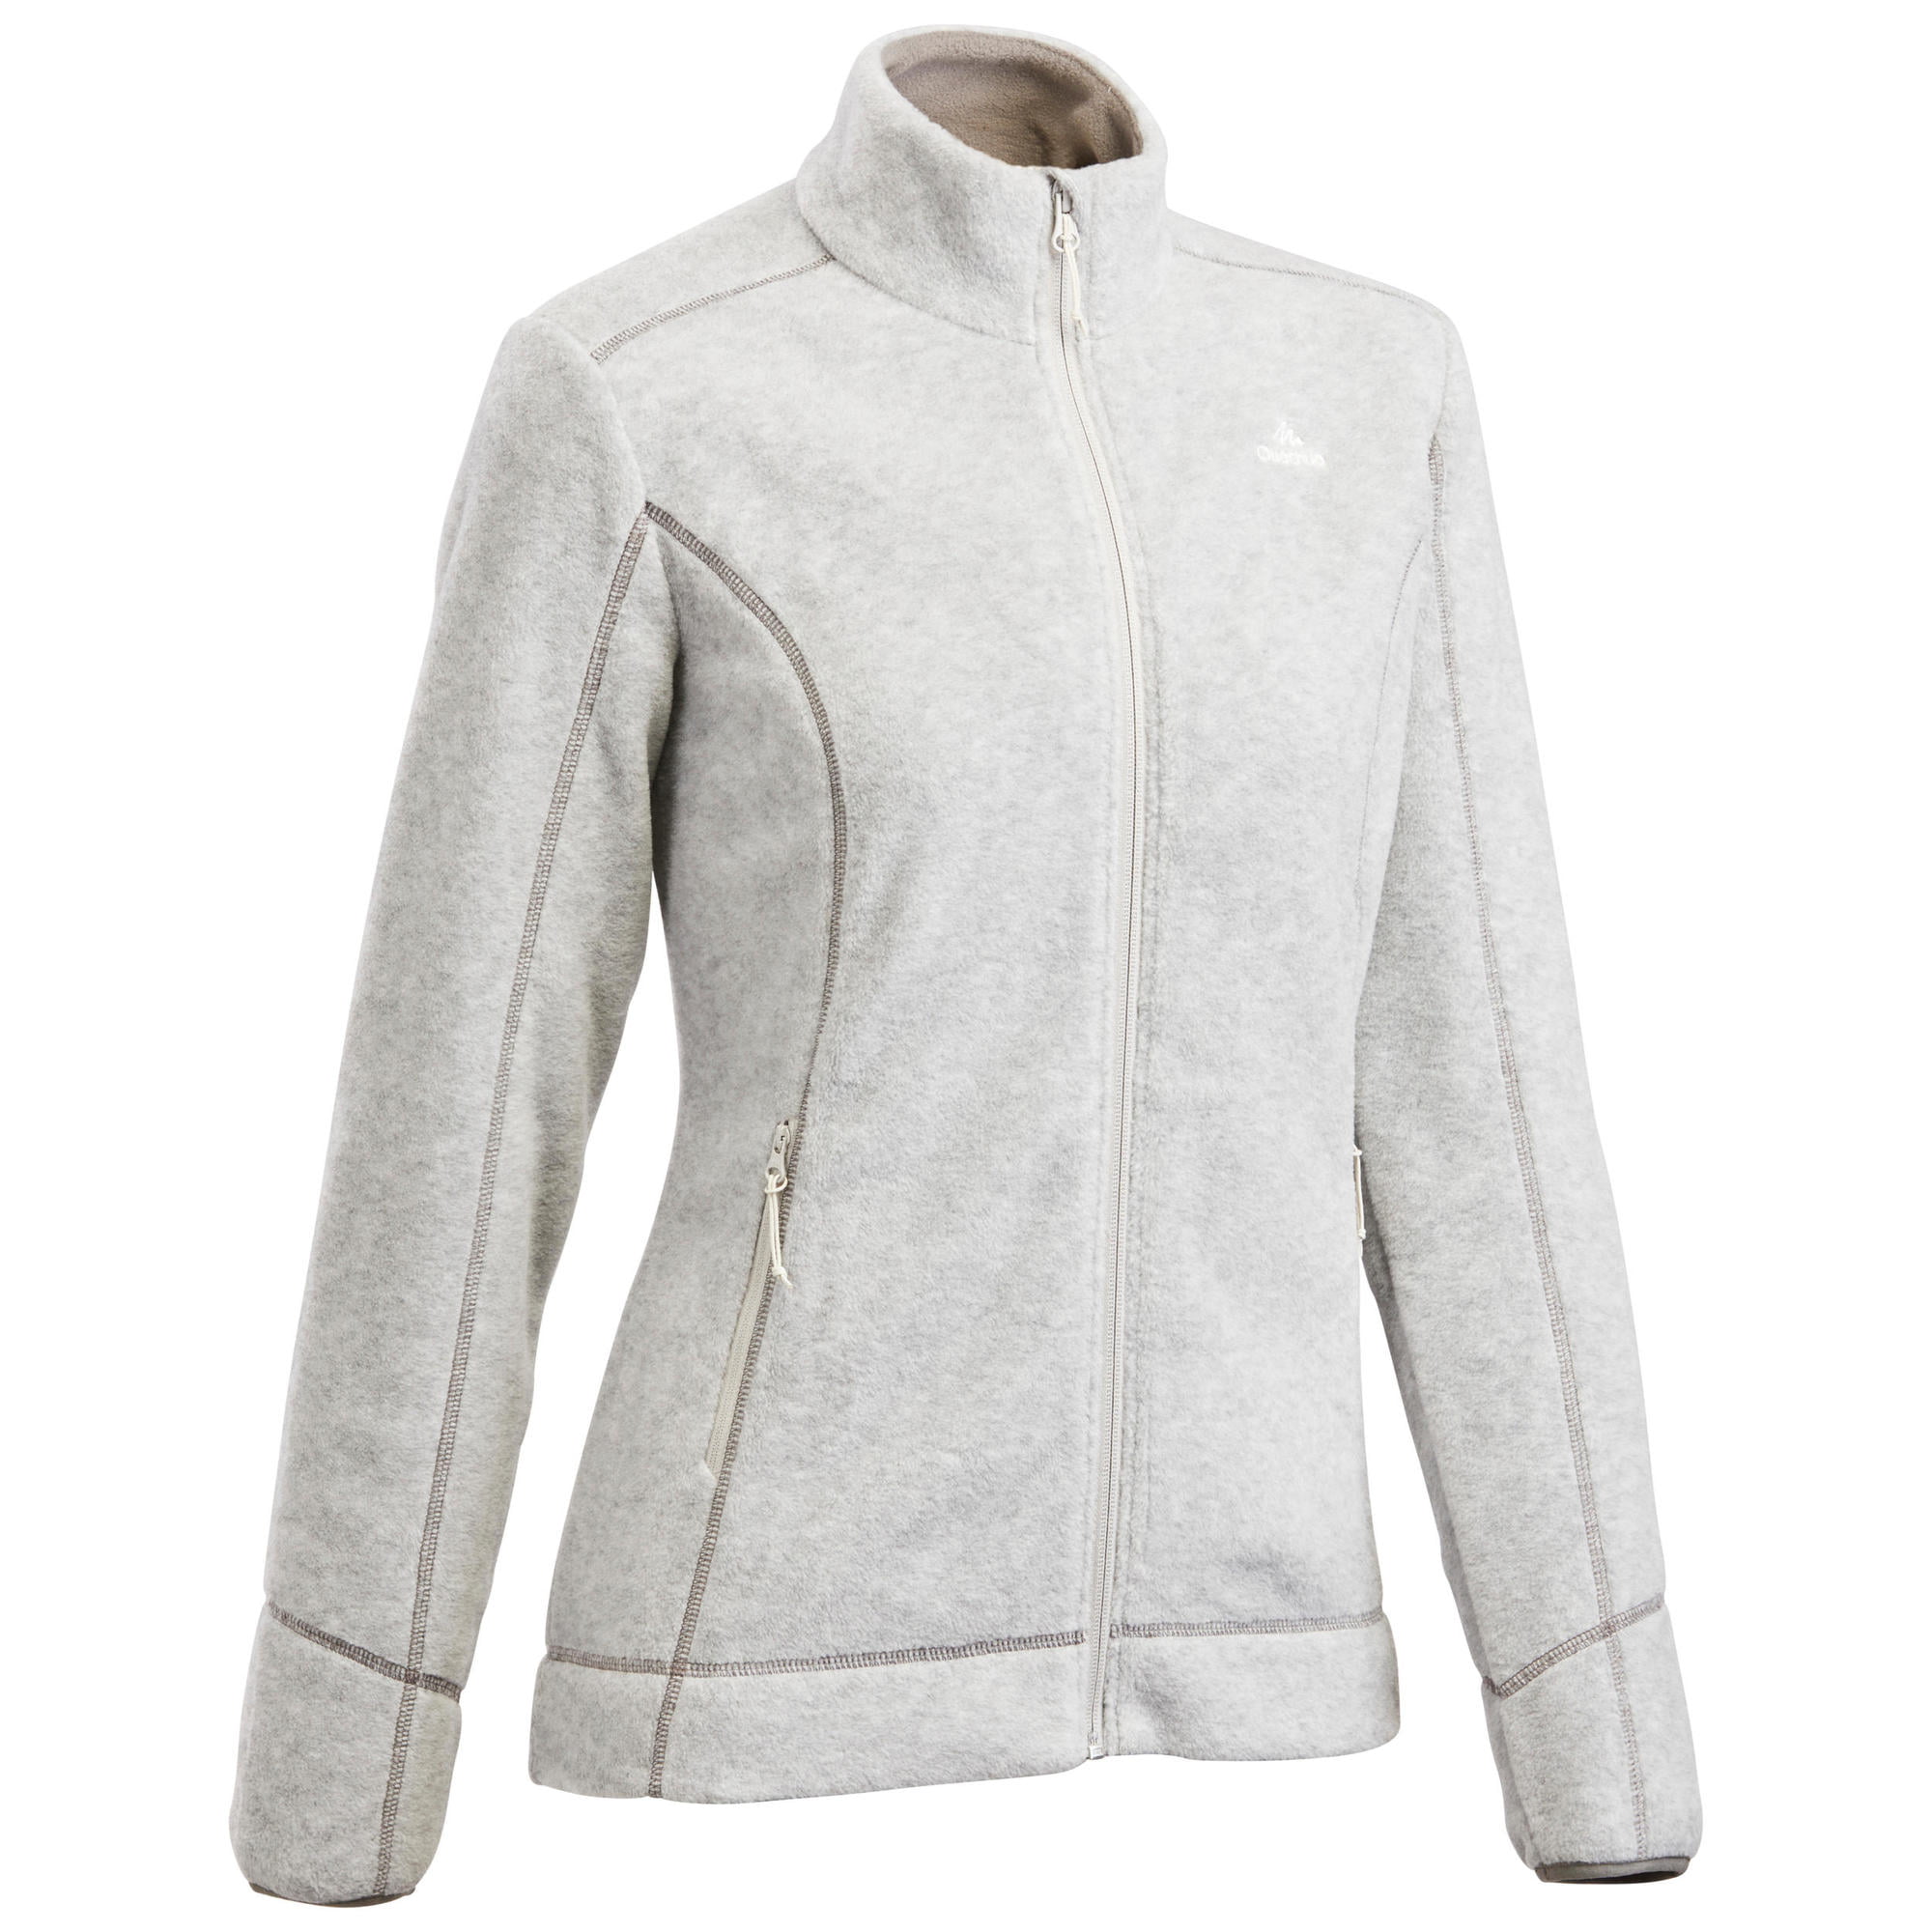 decathlon women's fleece jacket